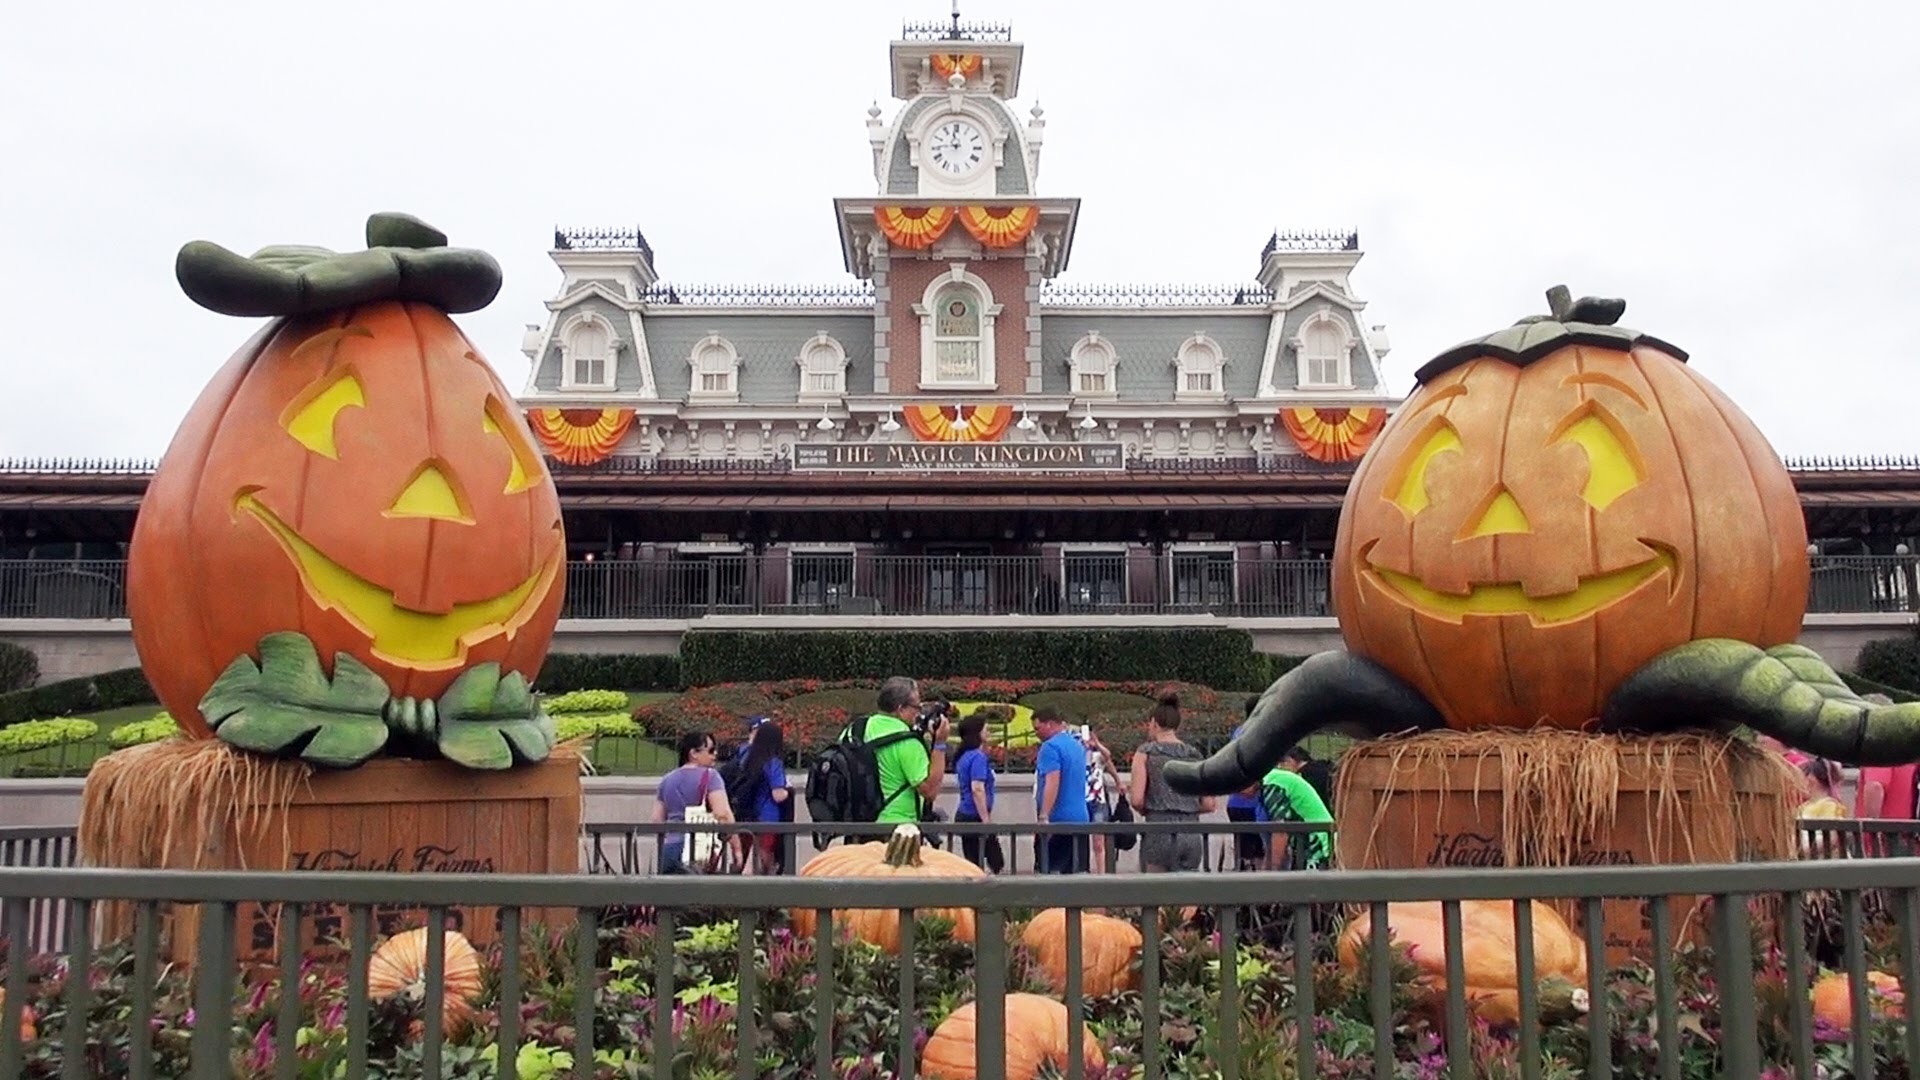 1920x1080 Halloween Decorations at The Magic Kingdom 2016, Walt Disney World w/  Pumpkins, Scarecrows, Donald - YouTube